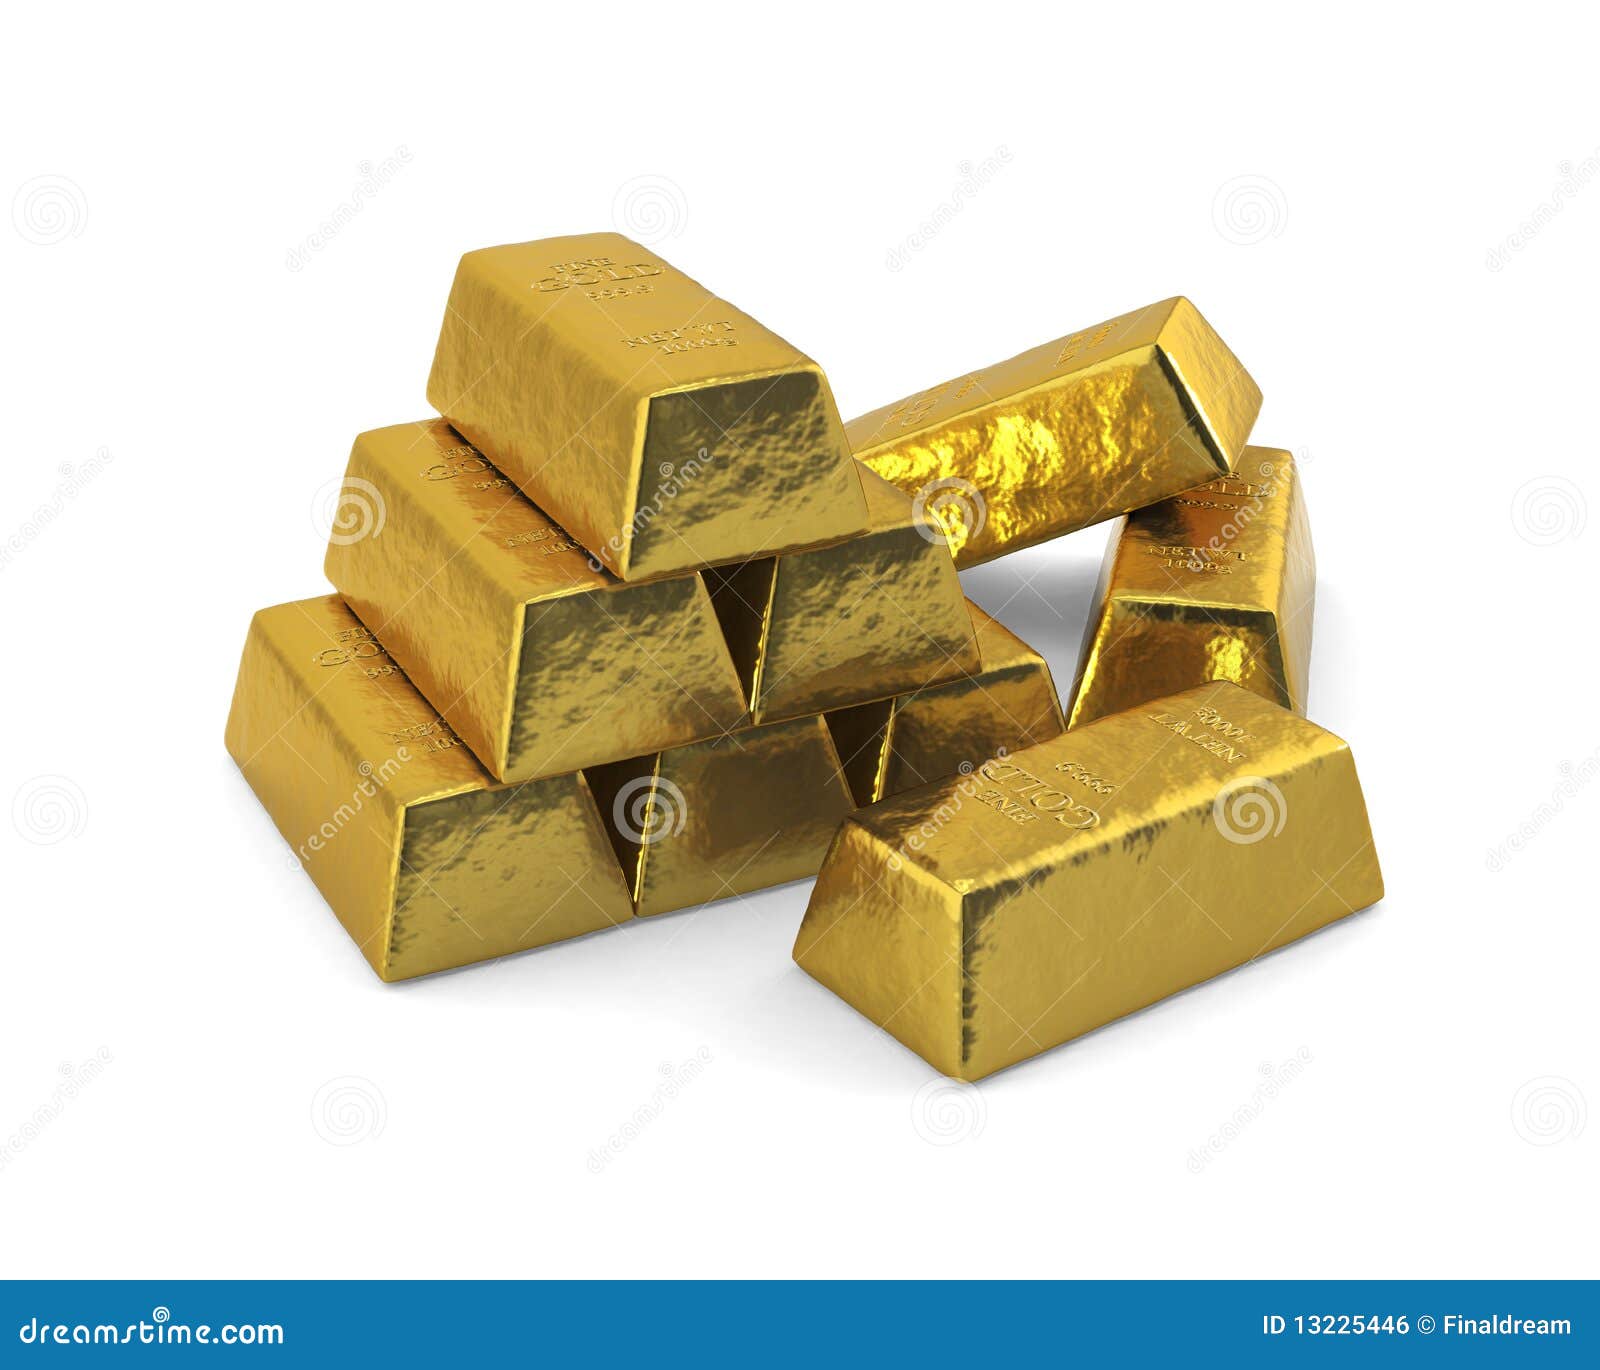 Gold bars stock illustration. Illustration of rich, gold - 13225446